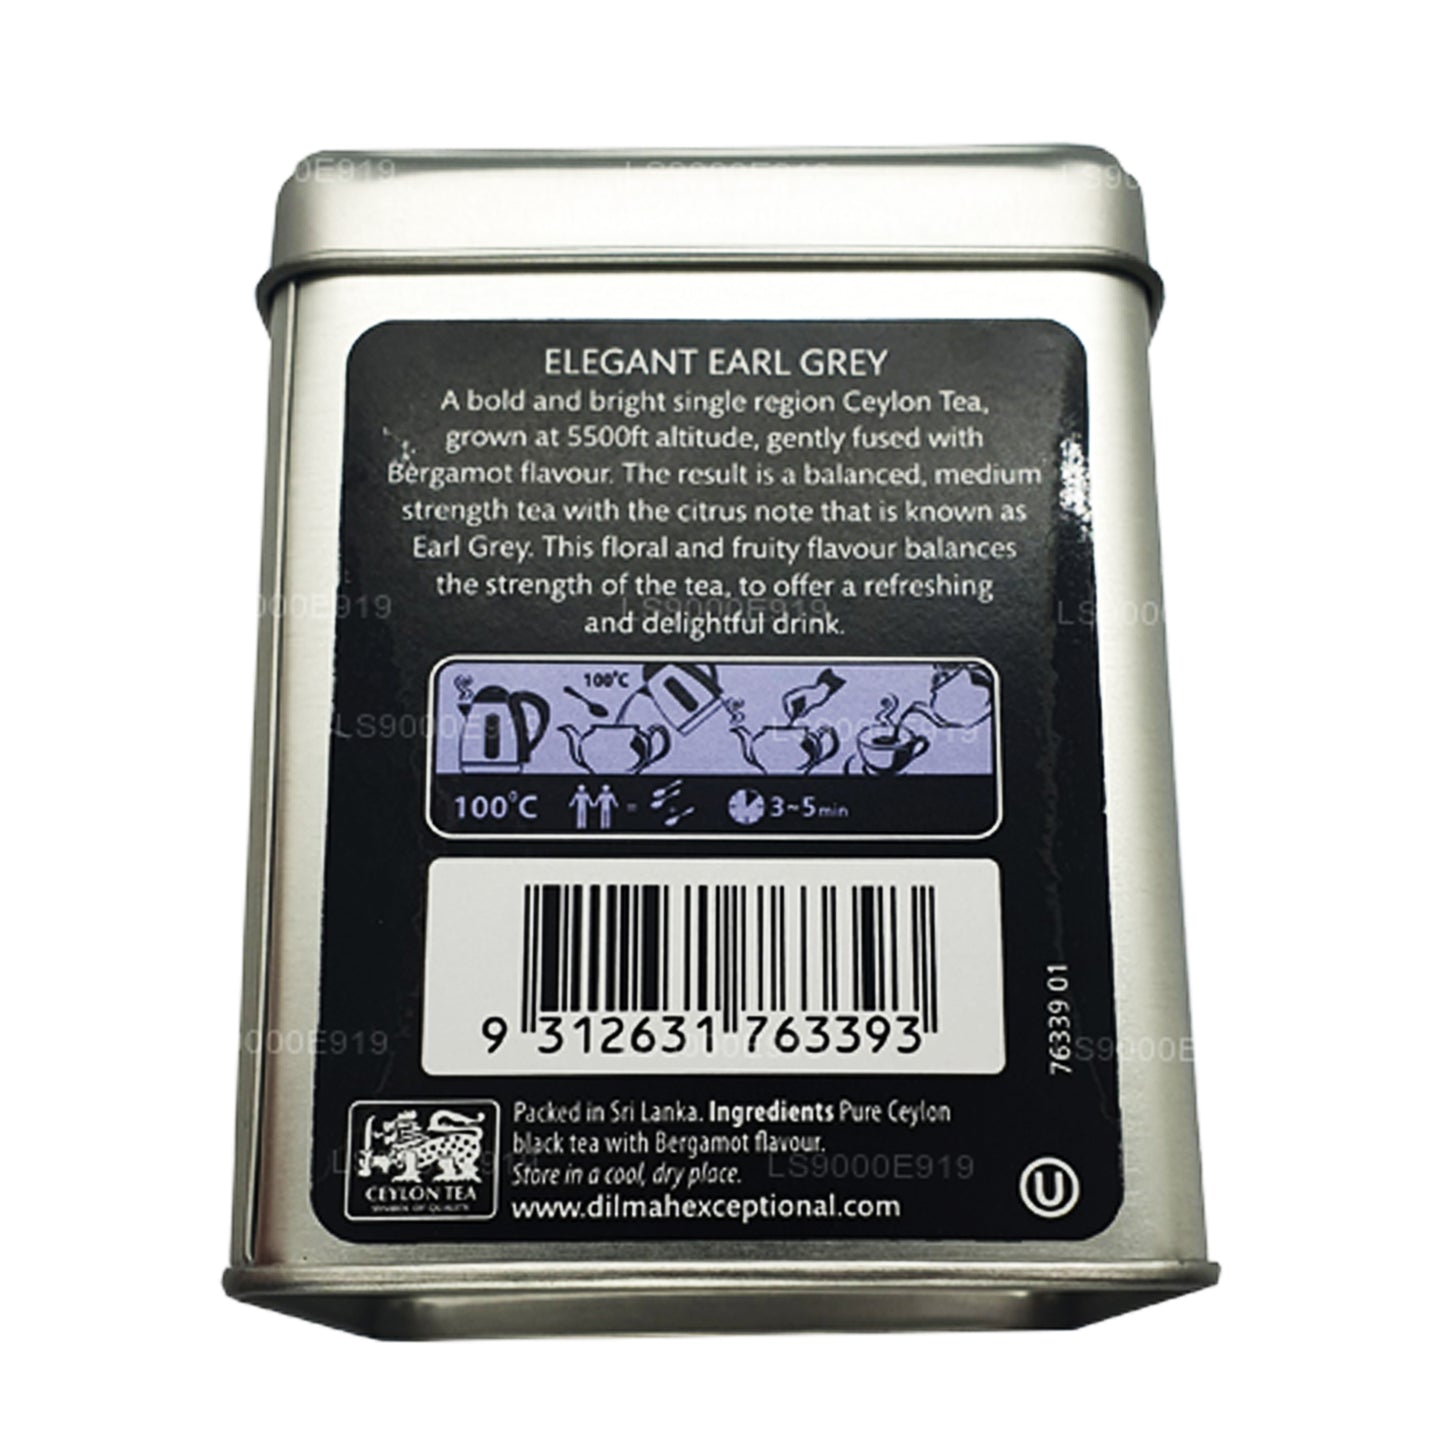 Thé aux vraies feuilles Dilmah Exceptional Elegant Earl Grey (100 g)